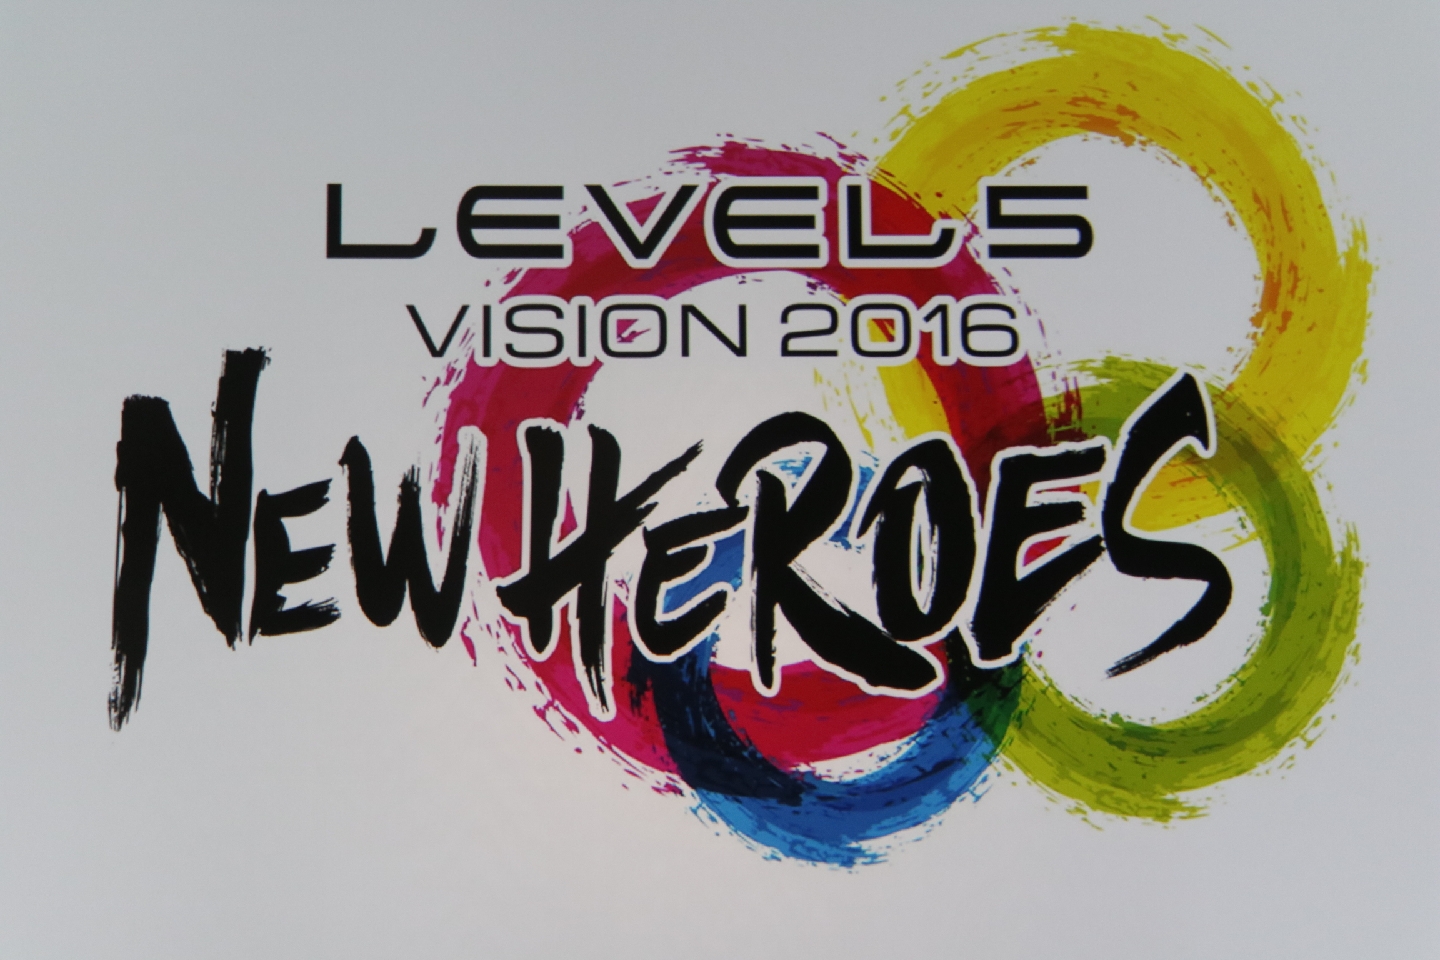 Level-5 Vision 2016